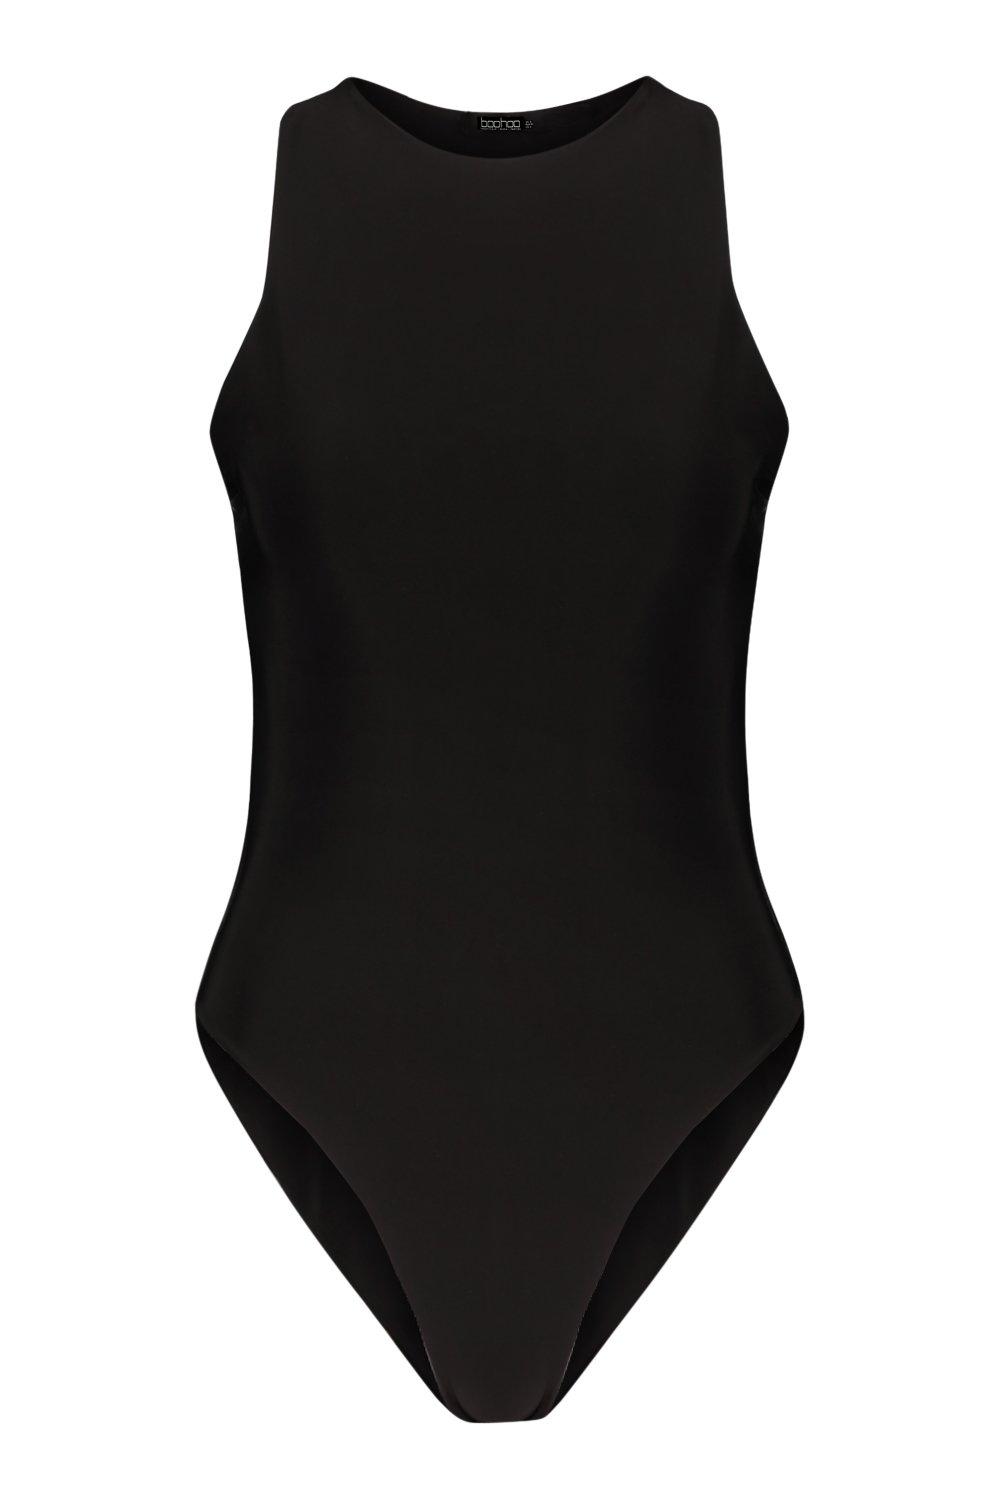 Double Layer Body Contour Round Neckline Bodysuit- Black 